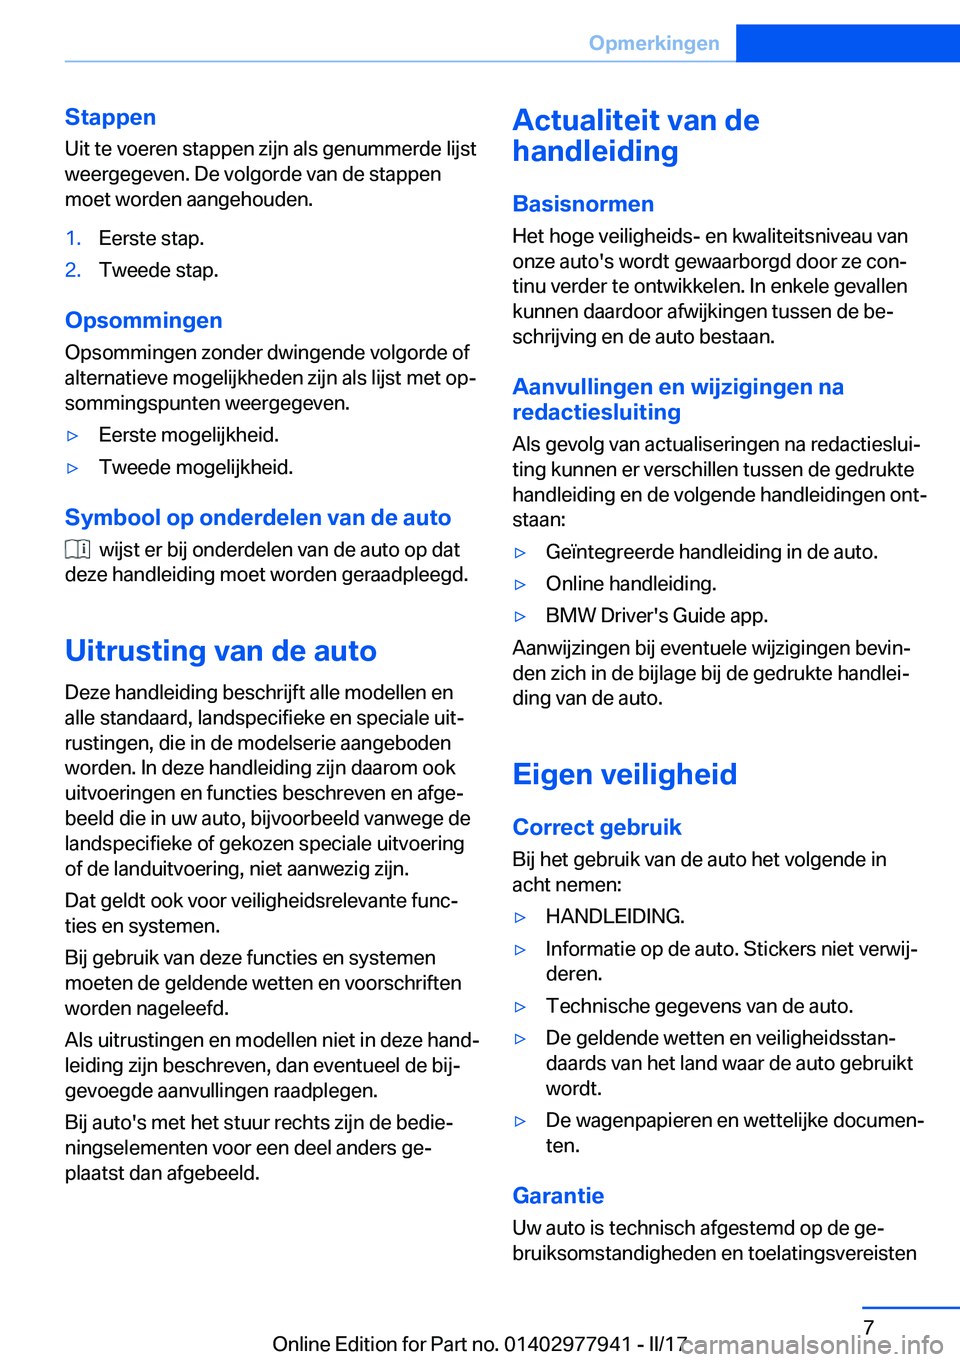 BMW 3 SERIES 2017  Instructieboekjes (in Dutch) �S�t�a�p�p�e�n
�U�i�t� �t�e� �v�o�e�r�e�n� �s�t�a�p�p�e�n� �z�i�j�n� �a�l�s� �g�e�n�u�m�m�e�r�d�e� �l�i�j�s�t �w�e�e�r�g�e�g�e�v�e�n�.� �D�e� �v�o�l�g�o�r�d�e� �v�a�n� �d�e� �s�t�a�p�p�e�n�m�o�e�t� �w